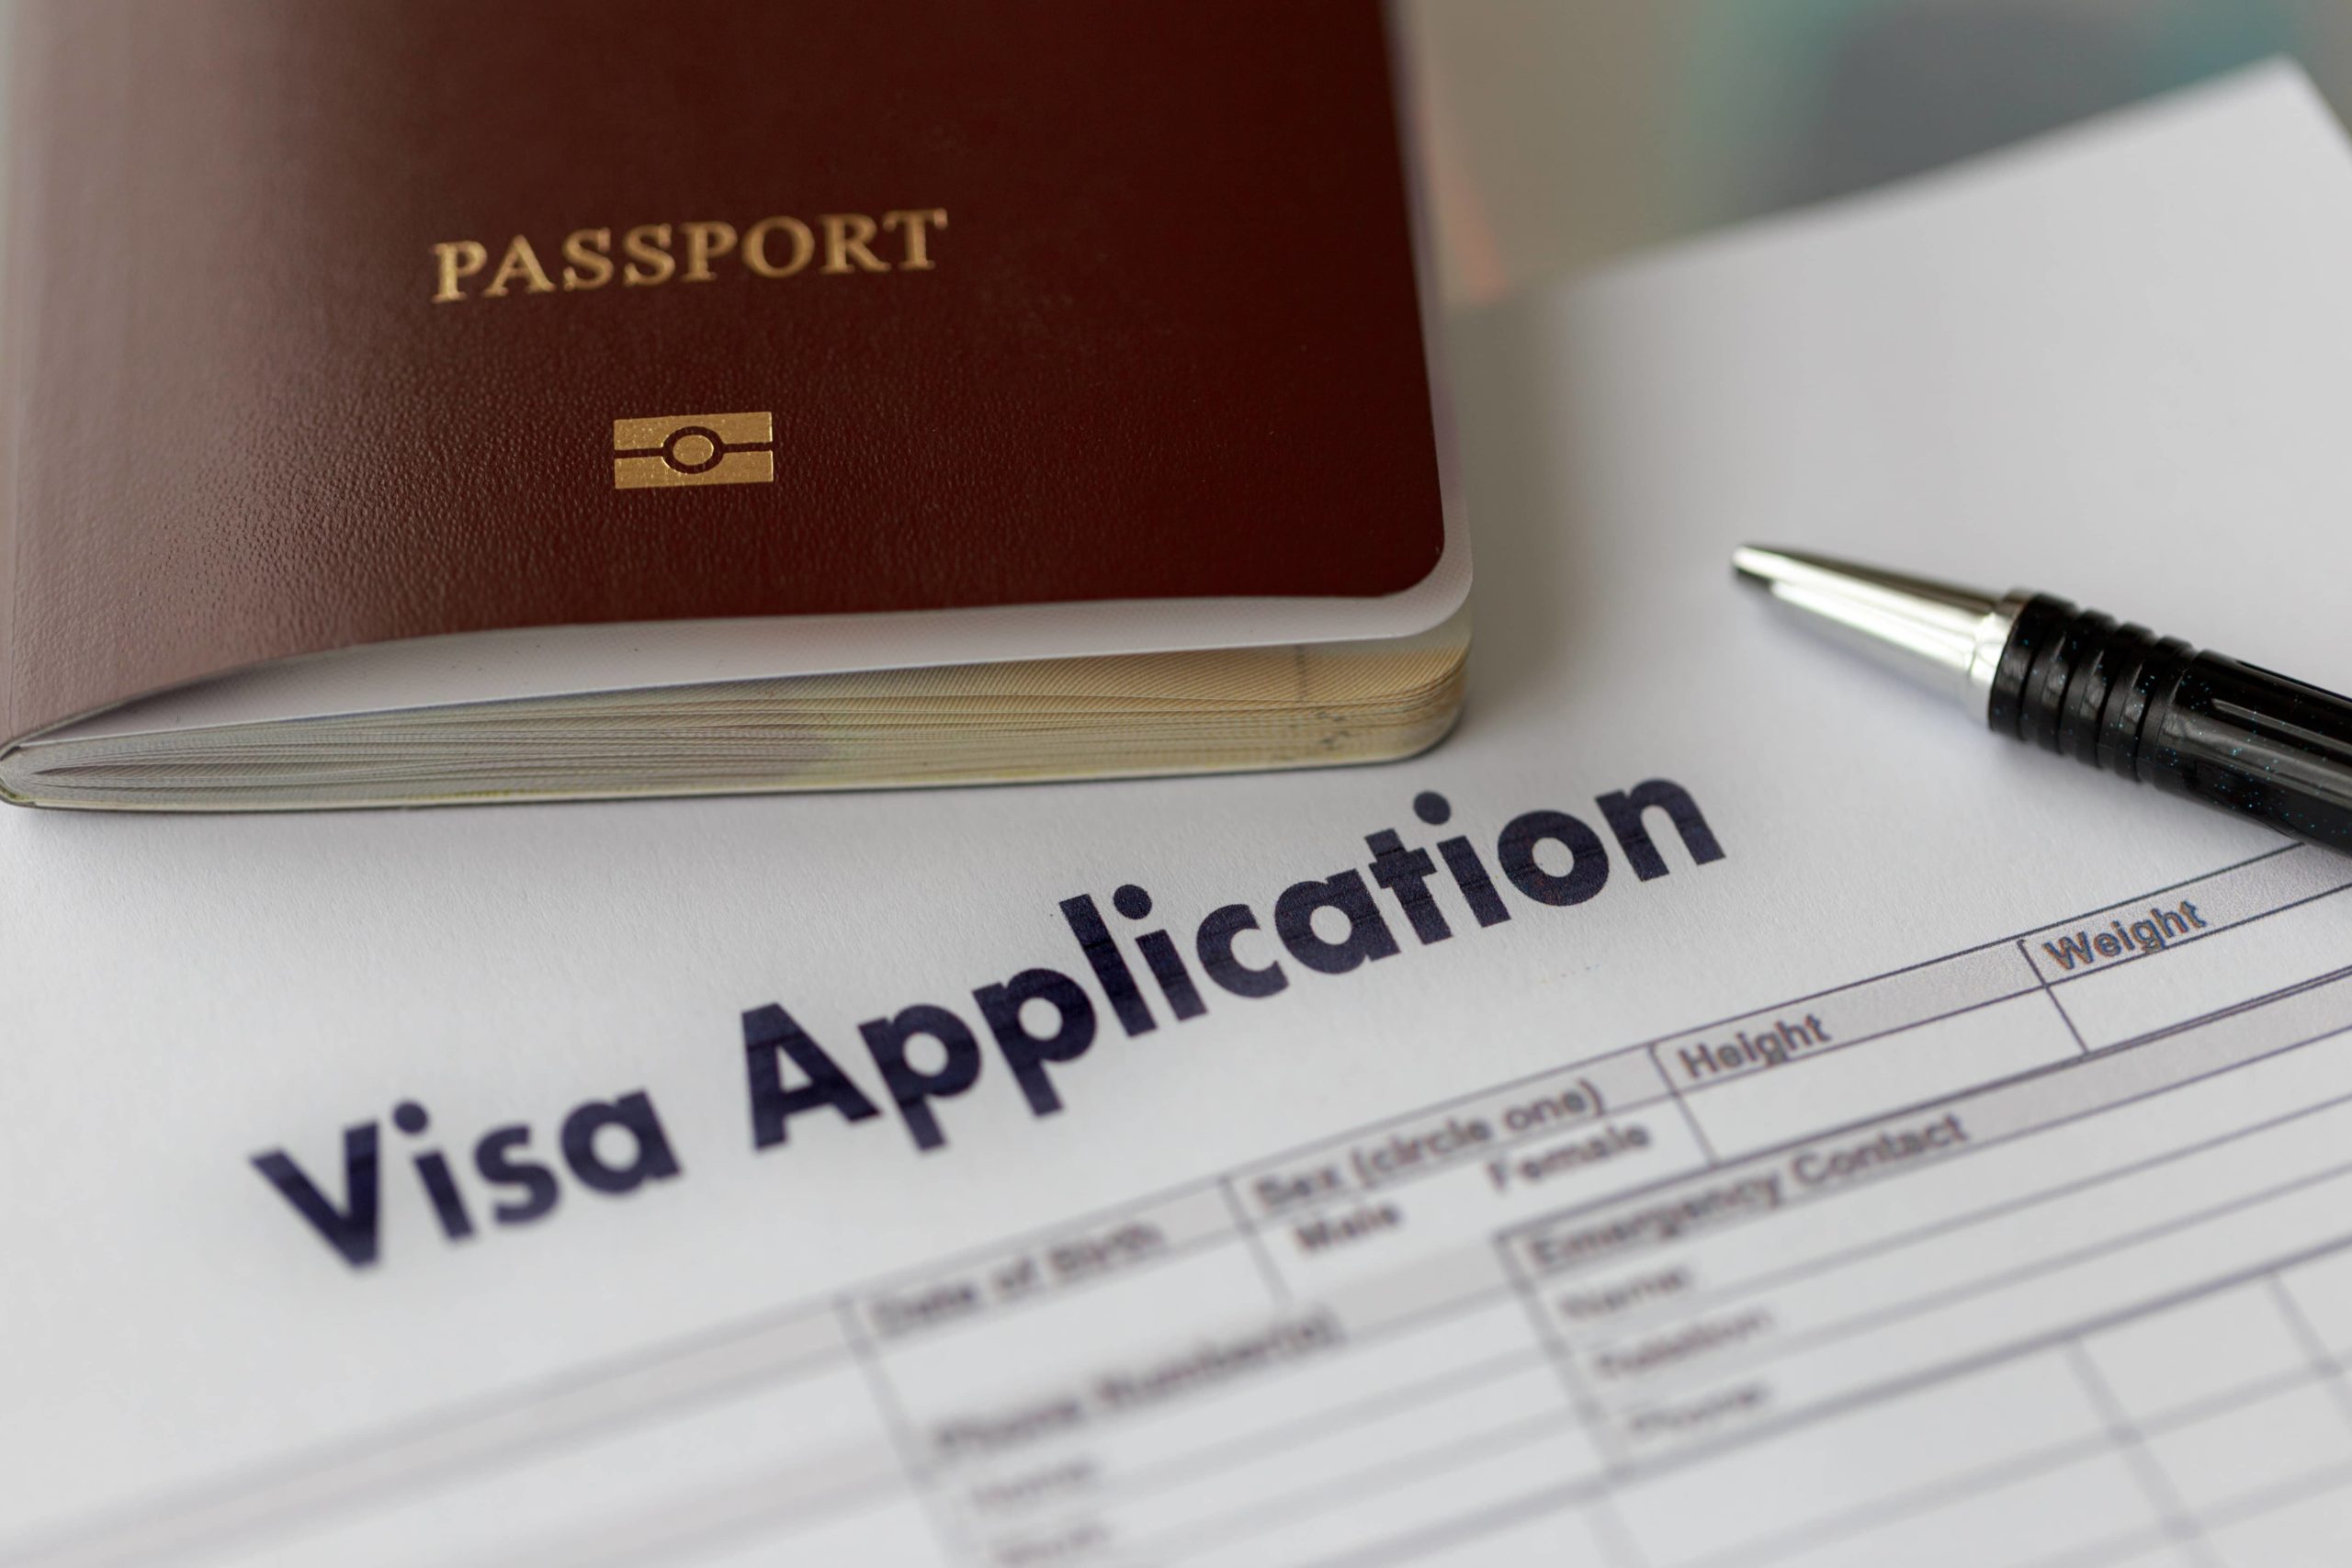 The simplified visa policies took effect back in January 1. (Photo: Stipendium Hungaricum)